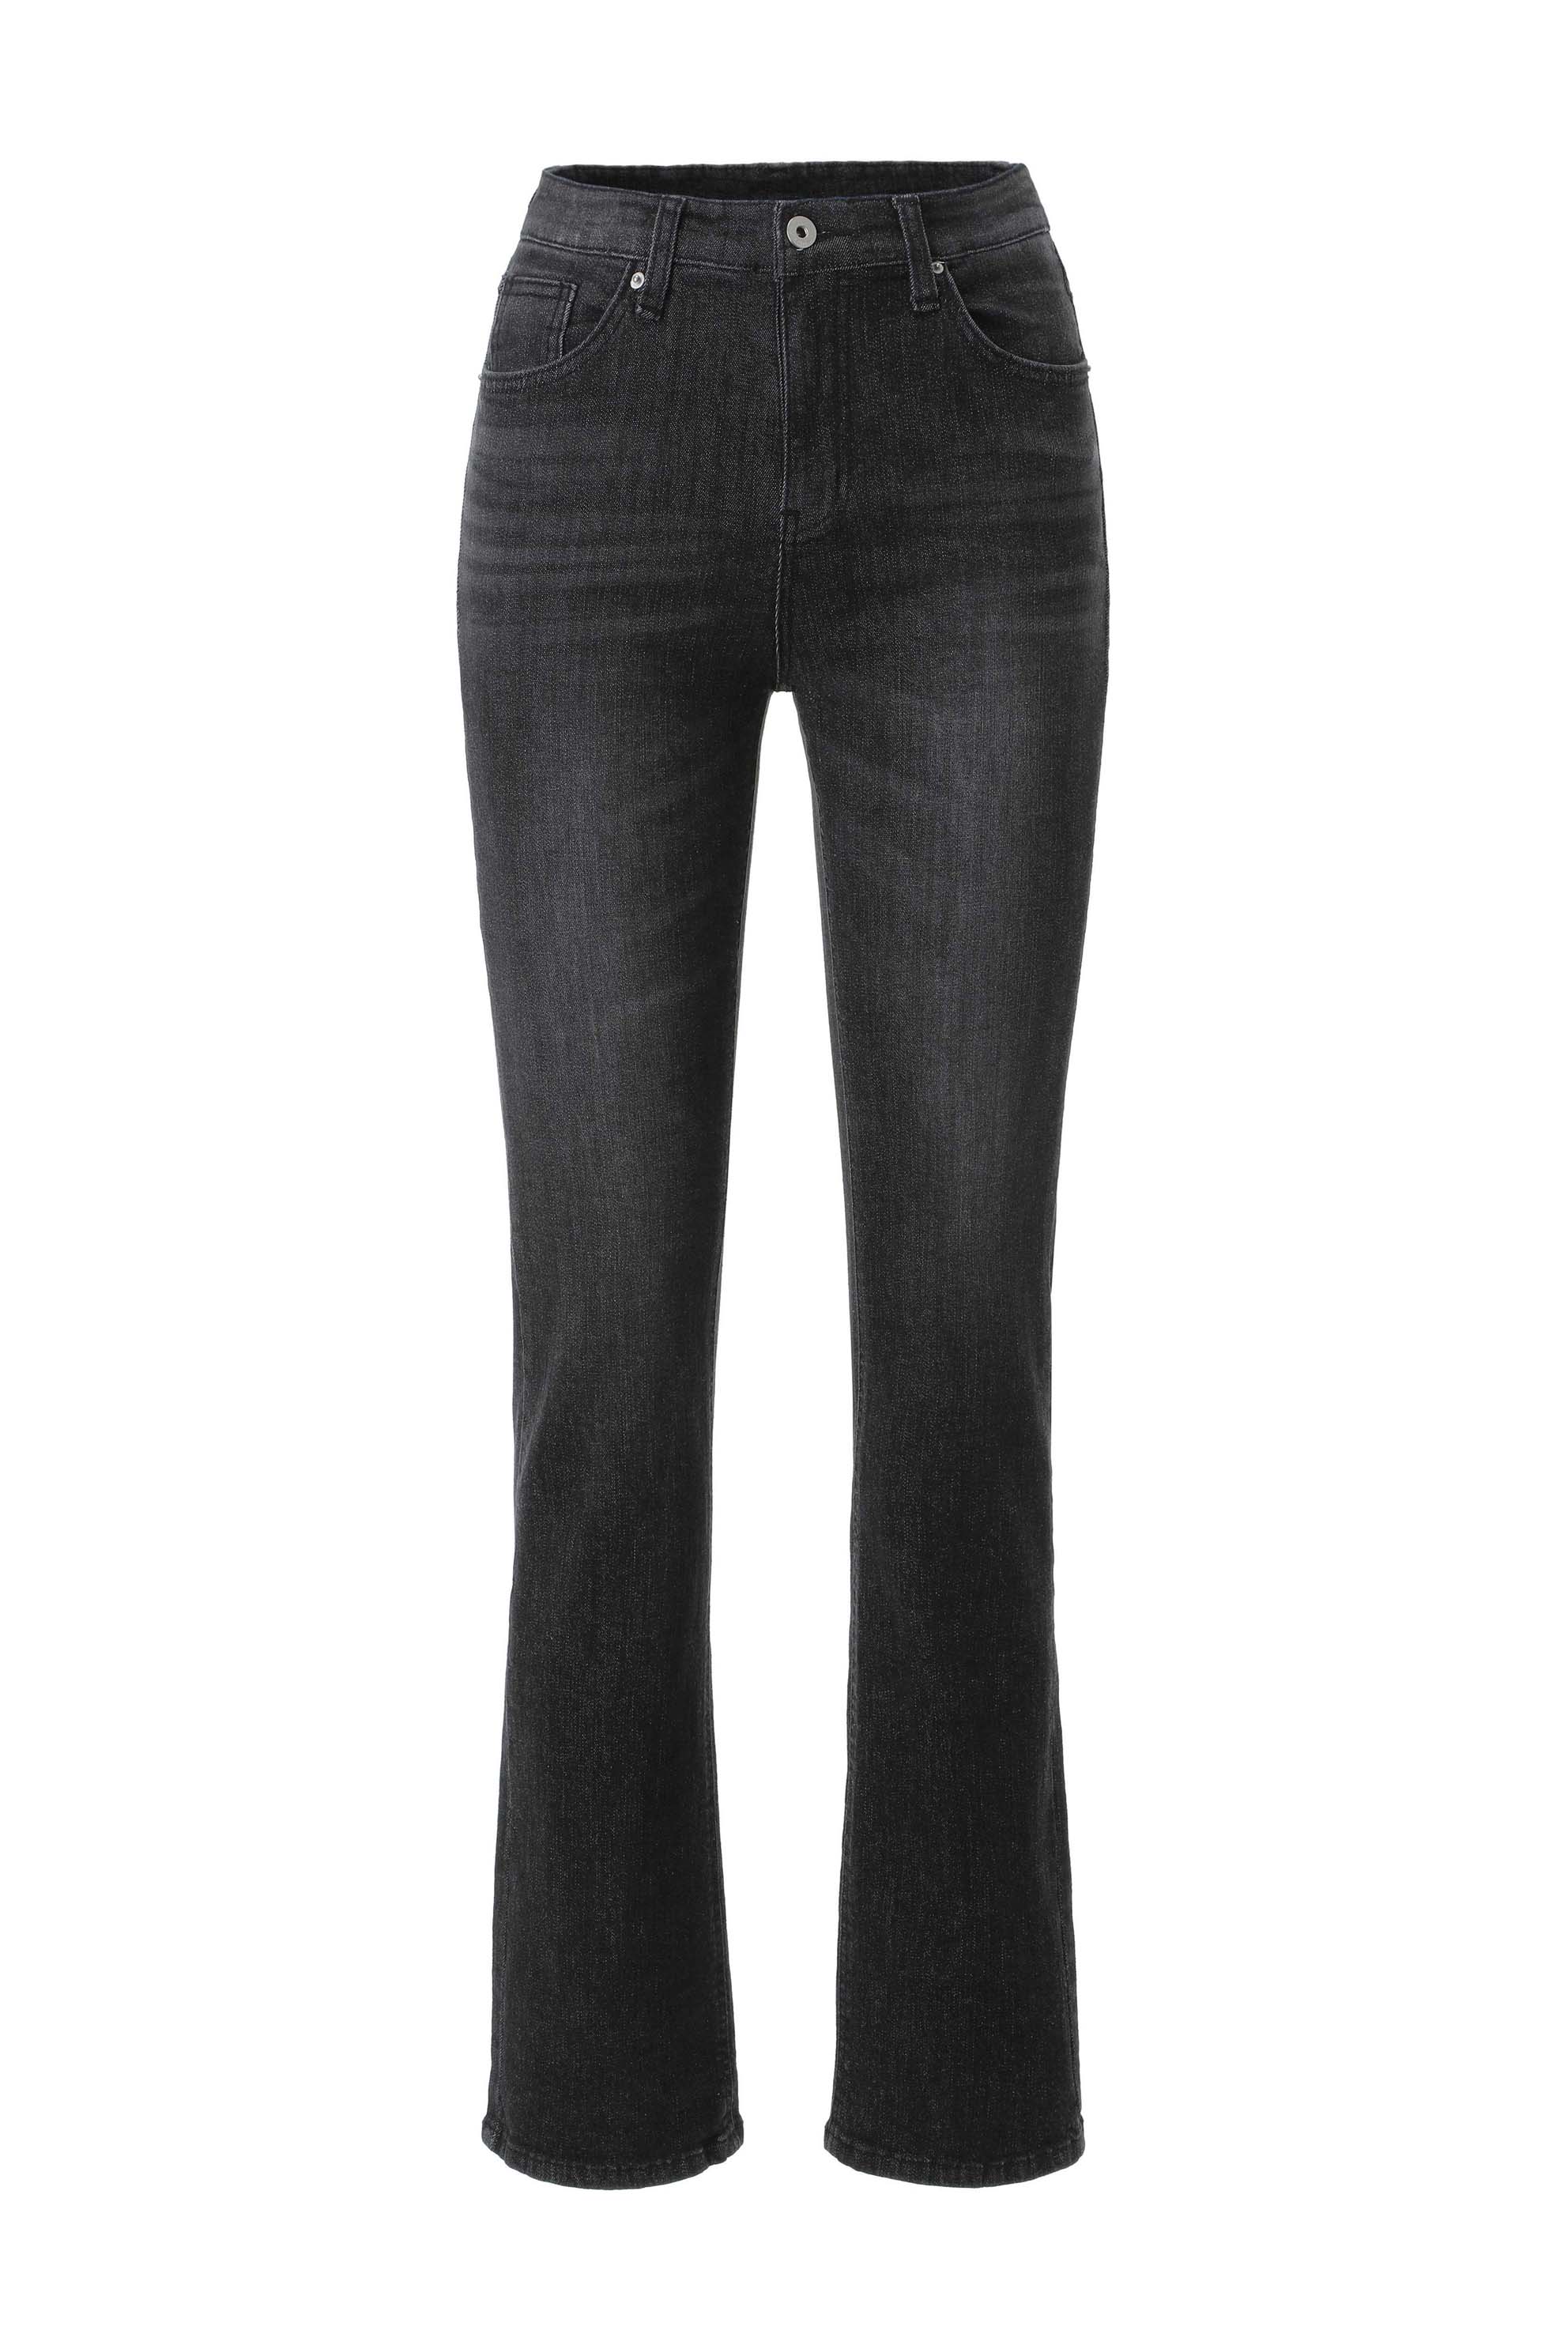 5501 Bootcut black jeans